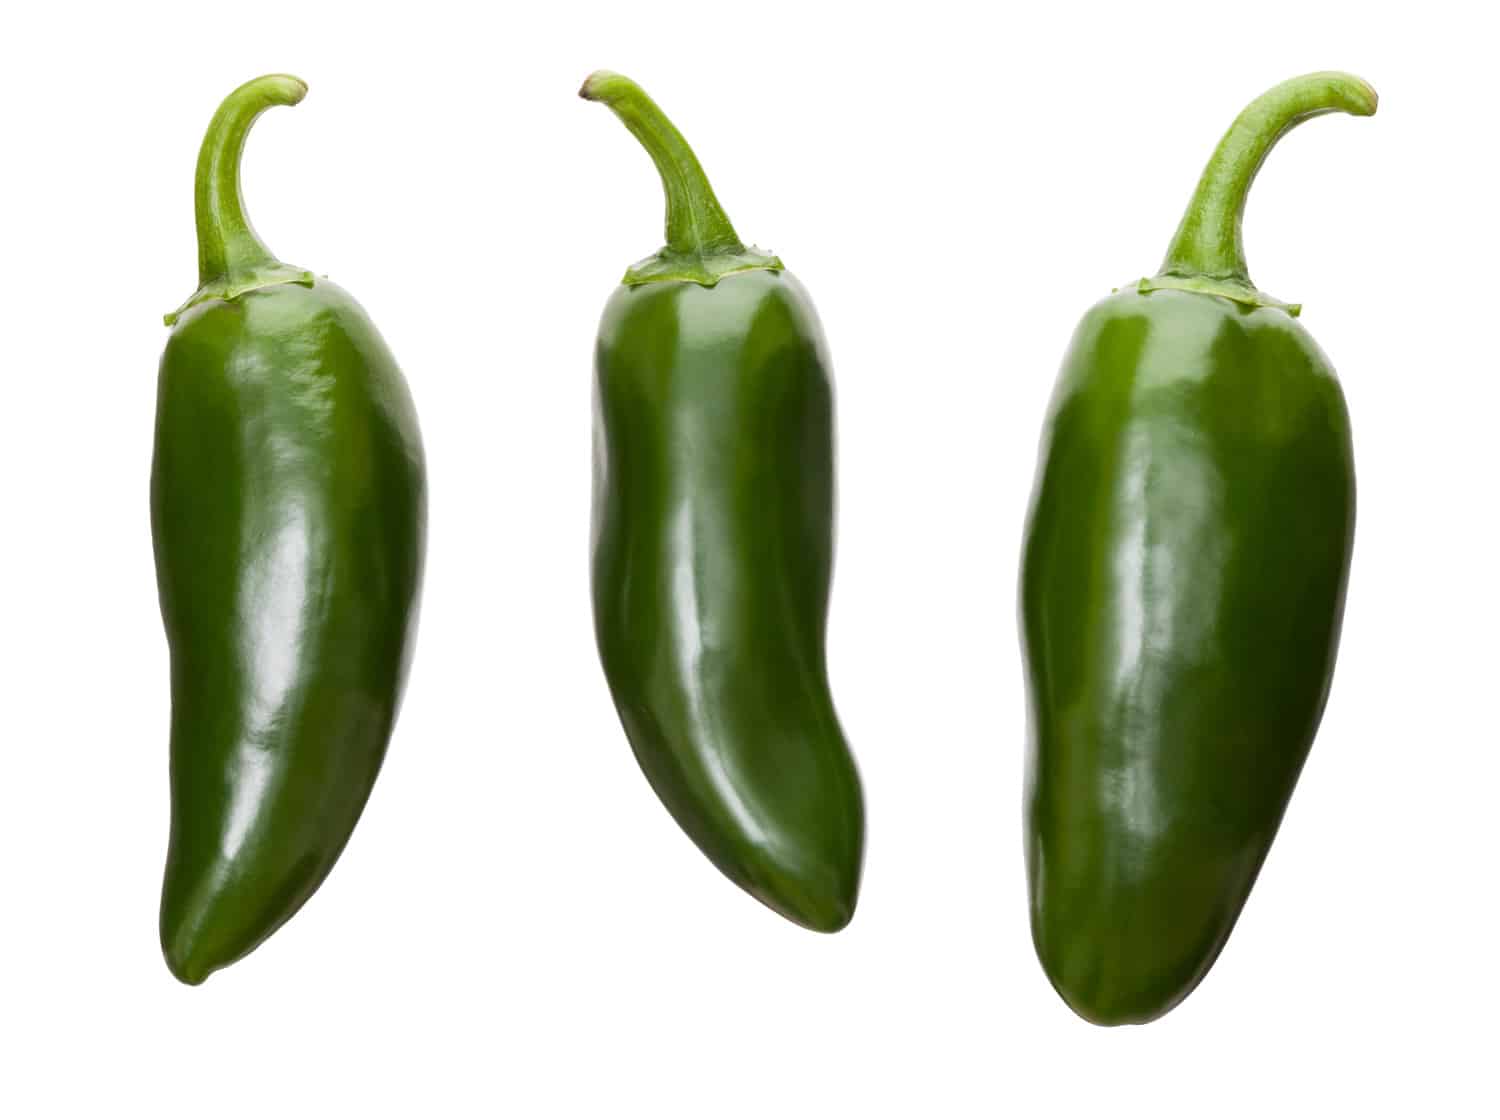 Three perfect fresh jalapeno chilis isolated on a white background